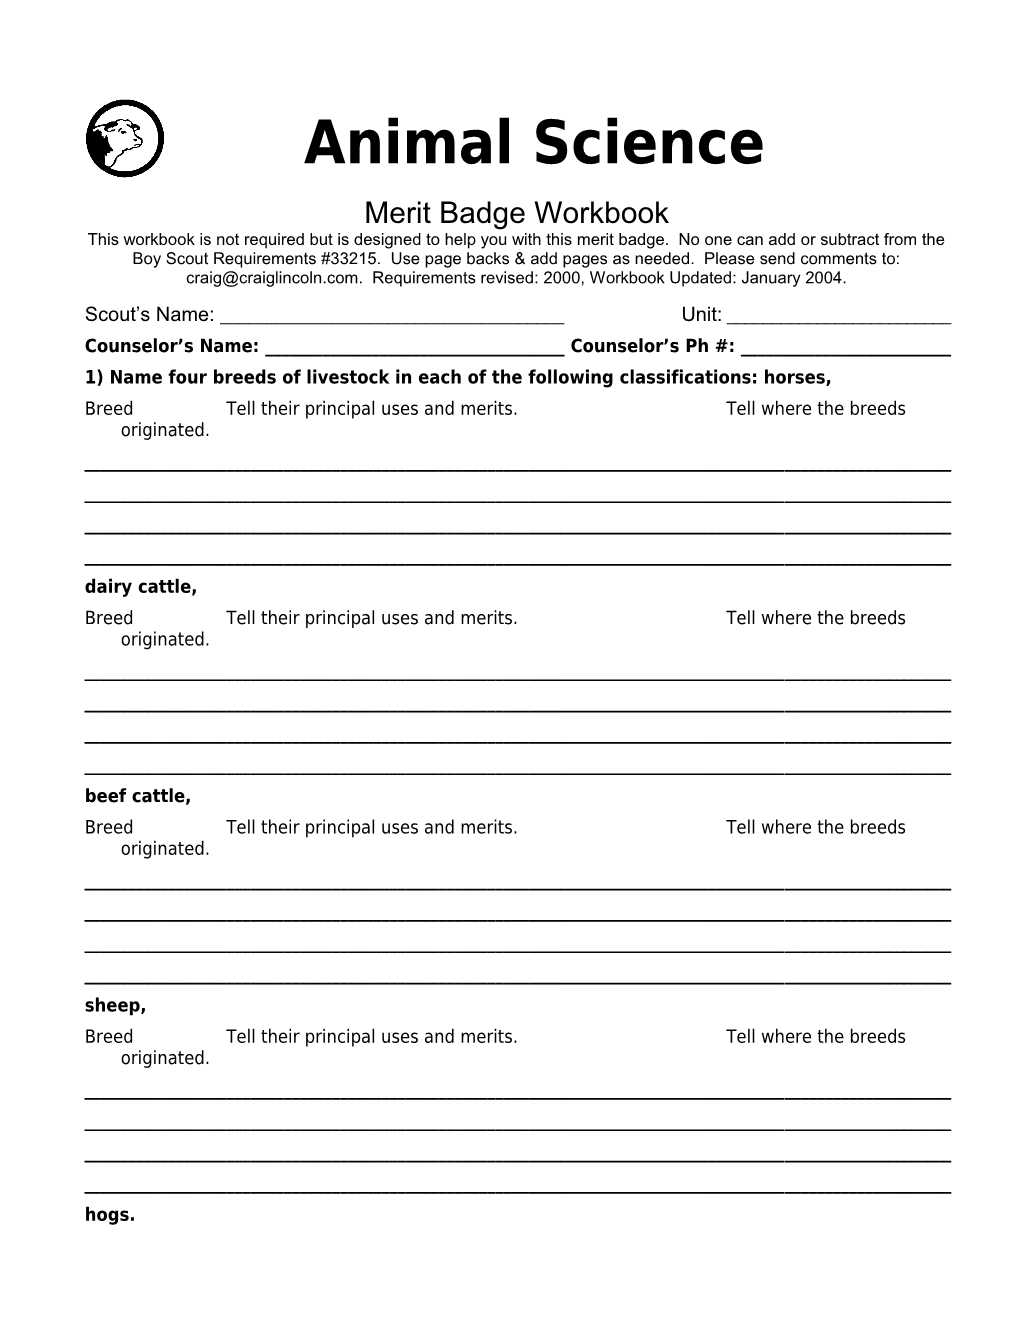 Animal Science P. 1Merit Badge Workbookscout's Name: ______